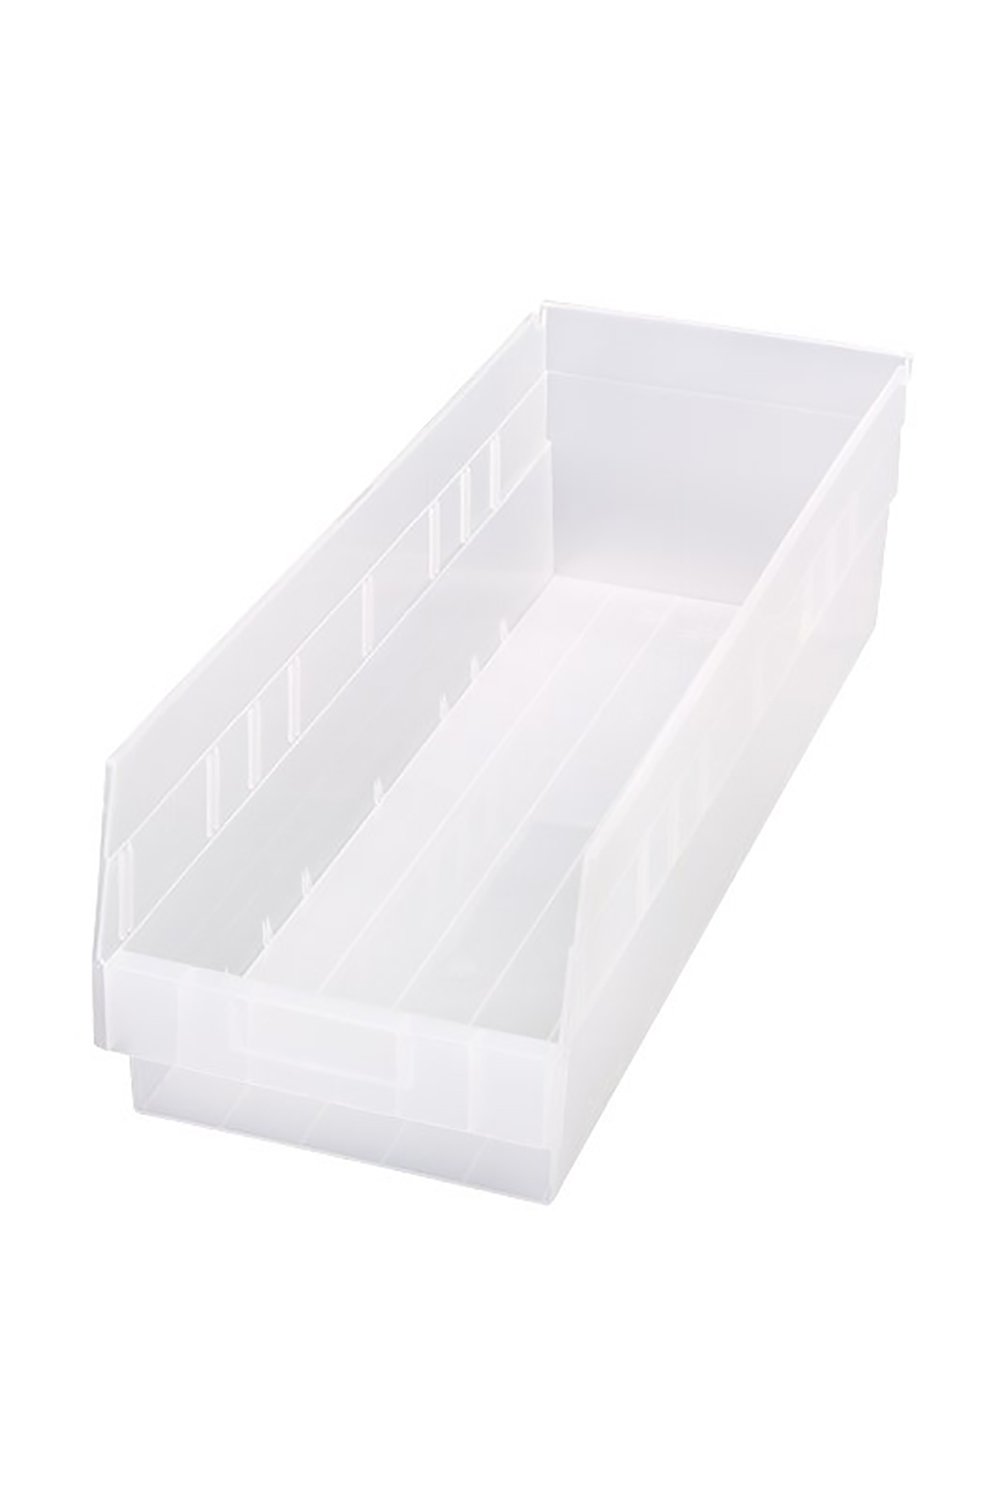 Shelf Bin for 24"D Shelves Bins & Containers Acart 23-5/8" x 11-1/8" x 6" Clear 